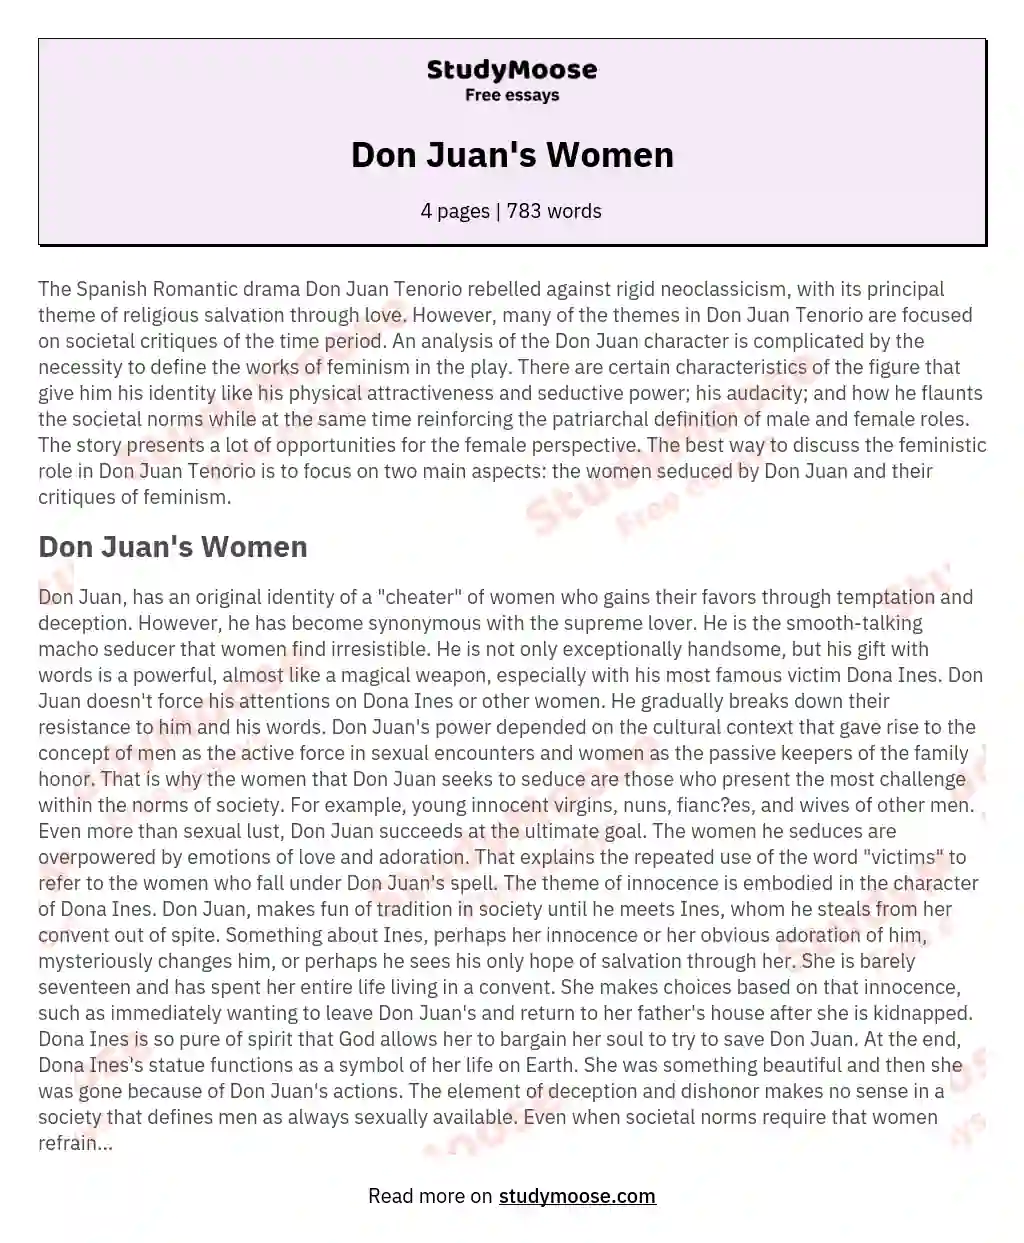 Don Juan's Women essay